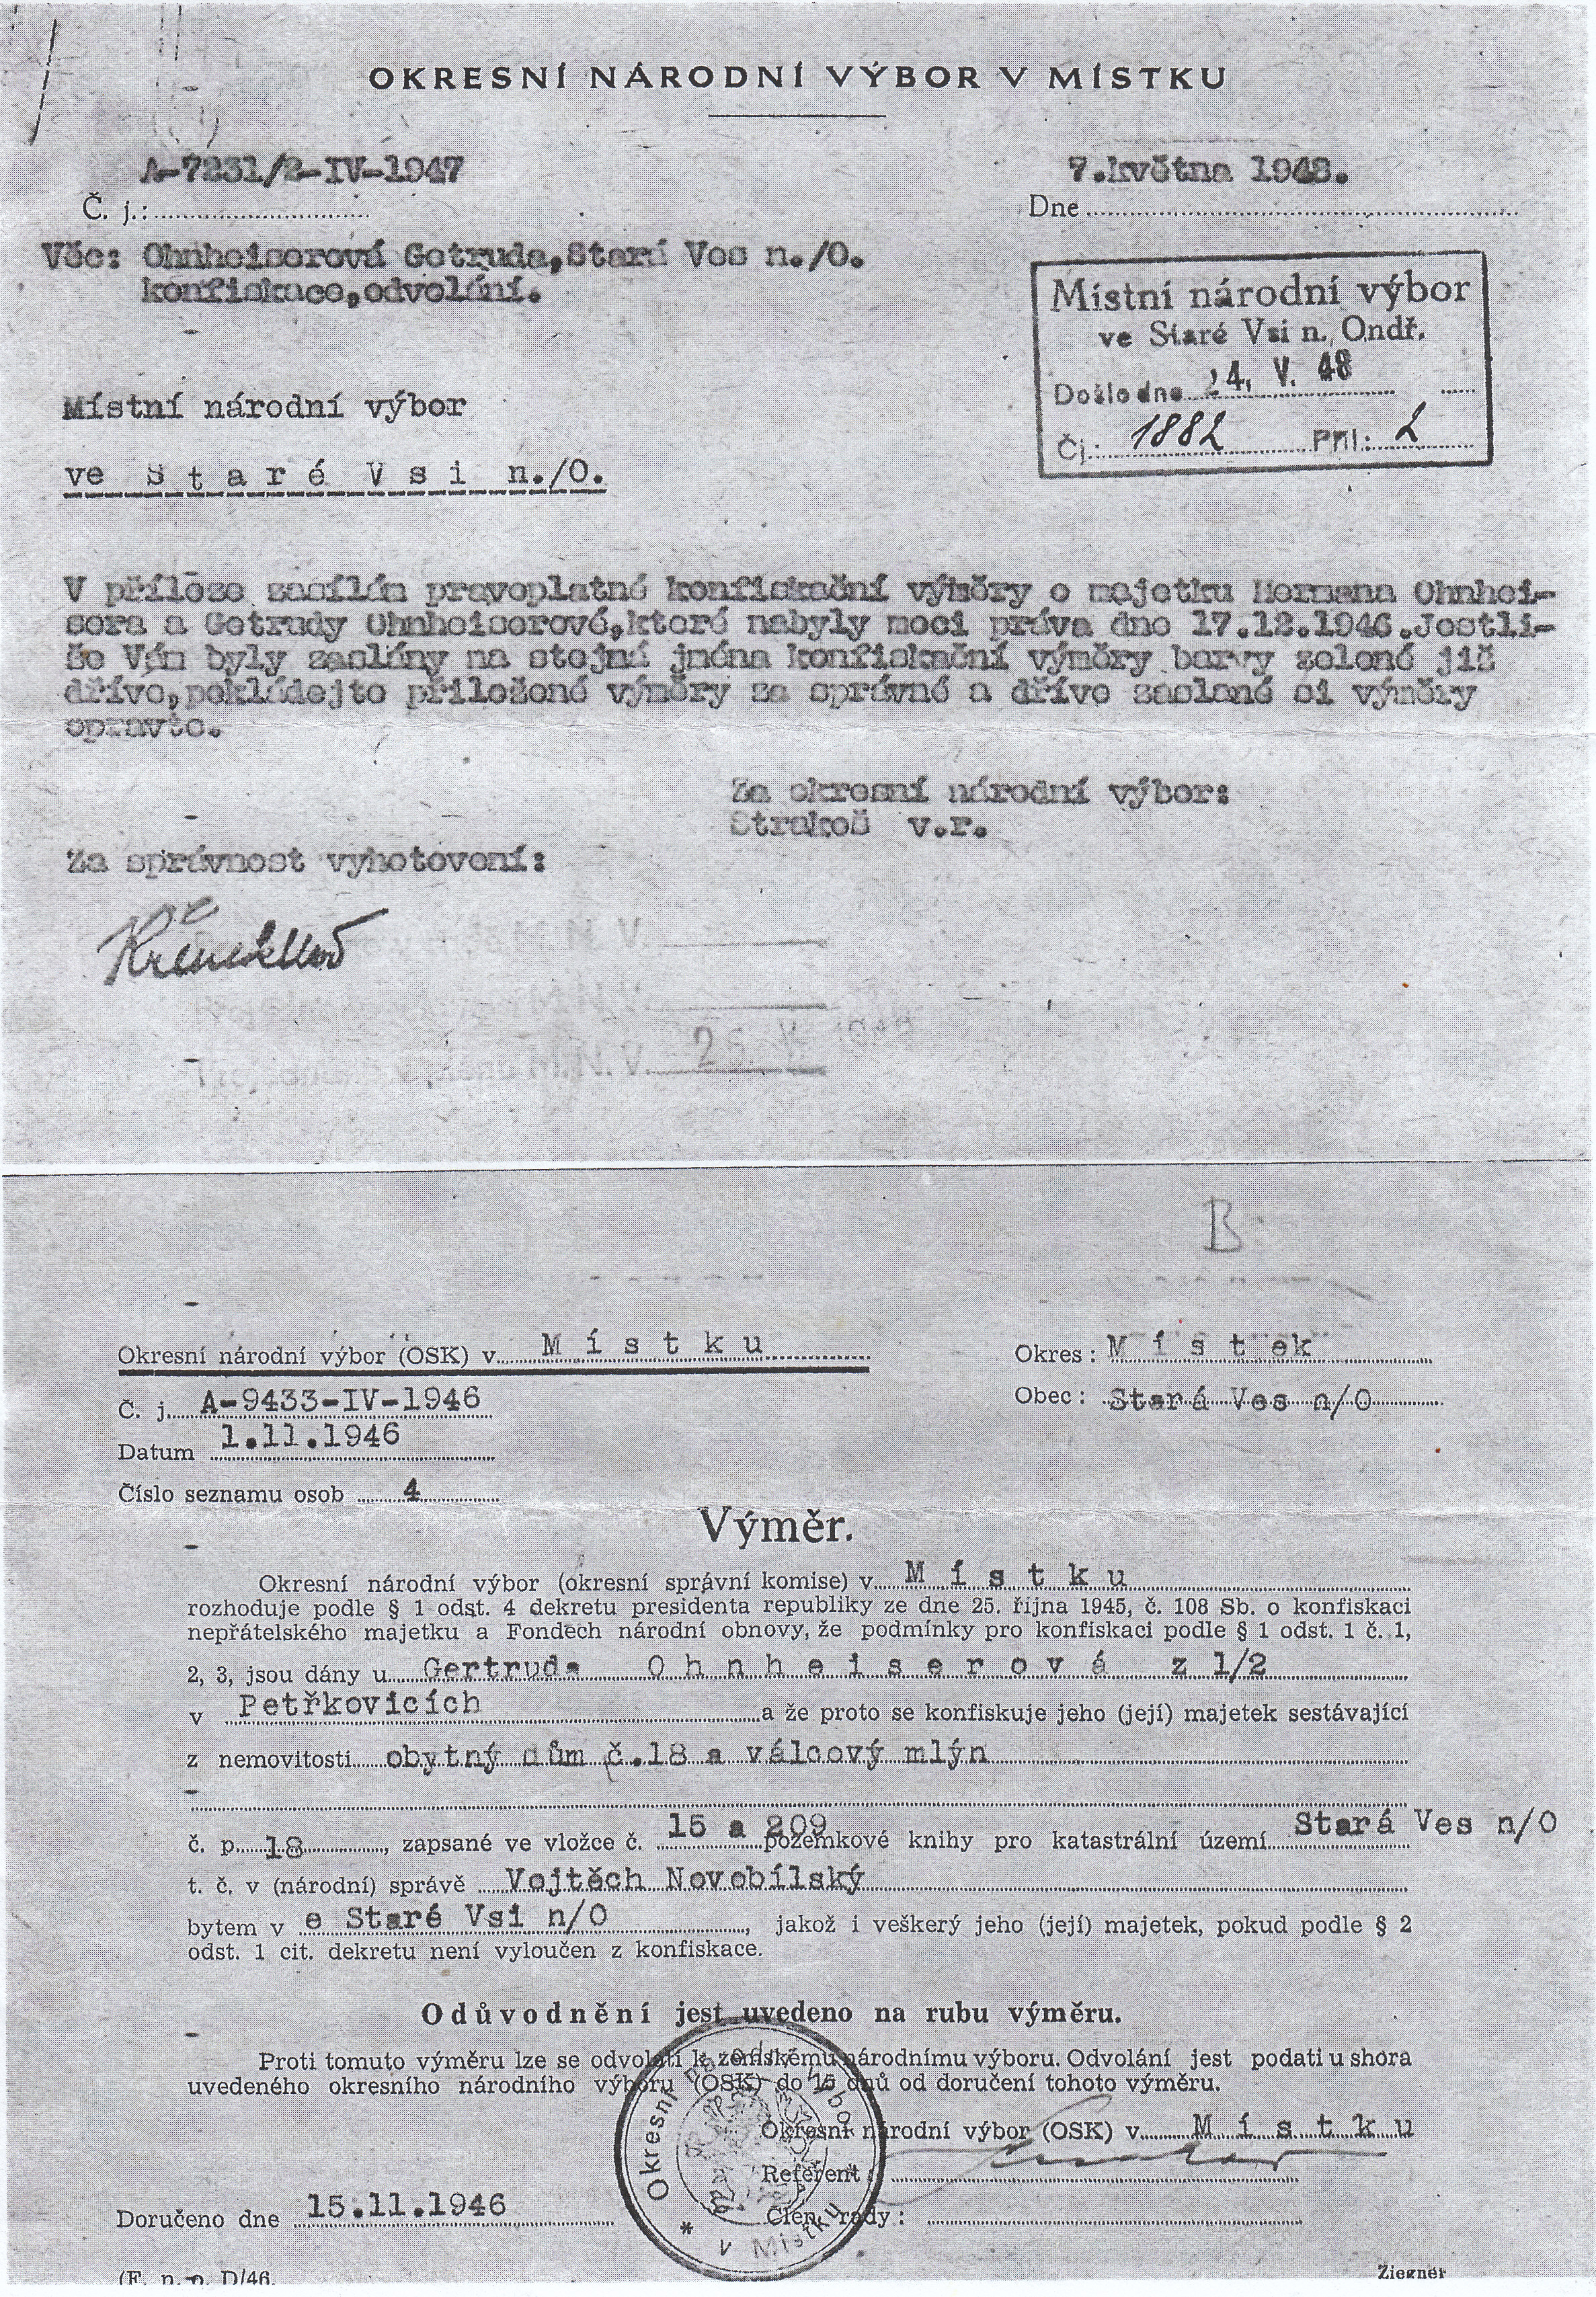 Ohnheiser dopis k Vymeru 15.11.1946